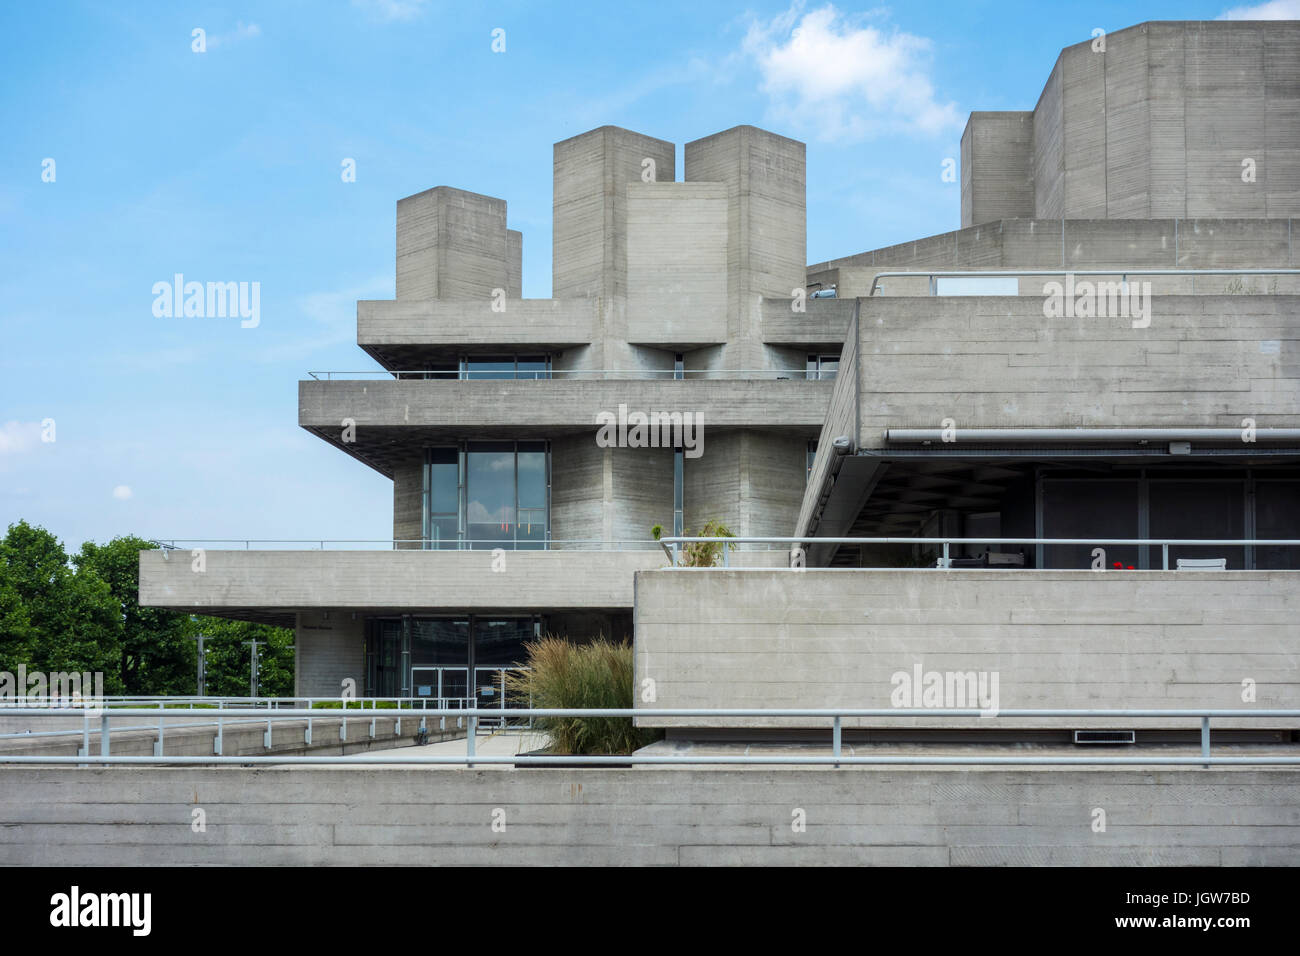 Brutalist architecture London: The Royal National Theatre brutalist / brutalism building by Denys Lasdun. Southbank, London, UK Stock Photo